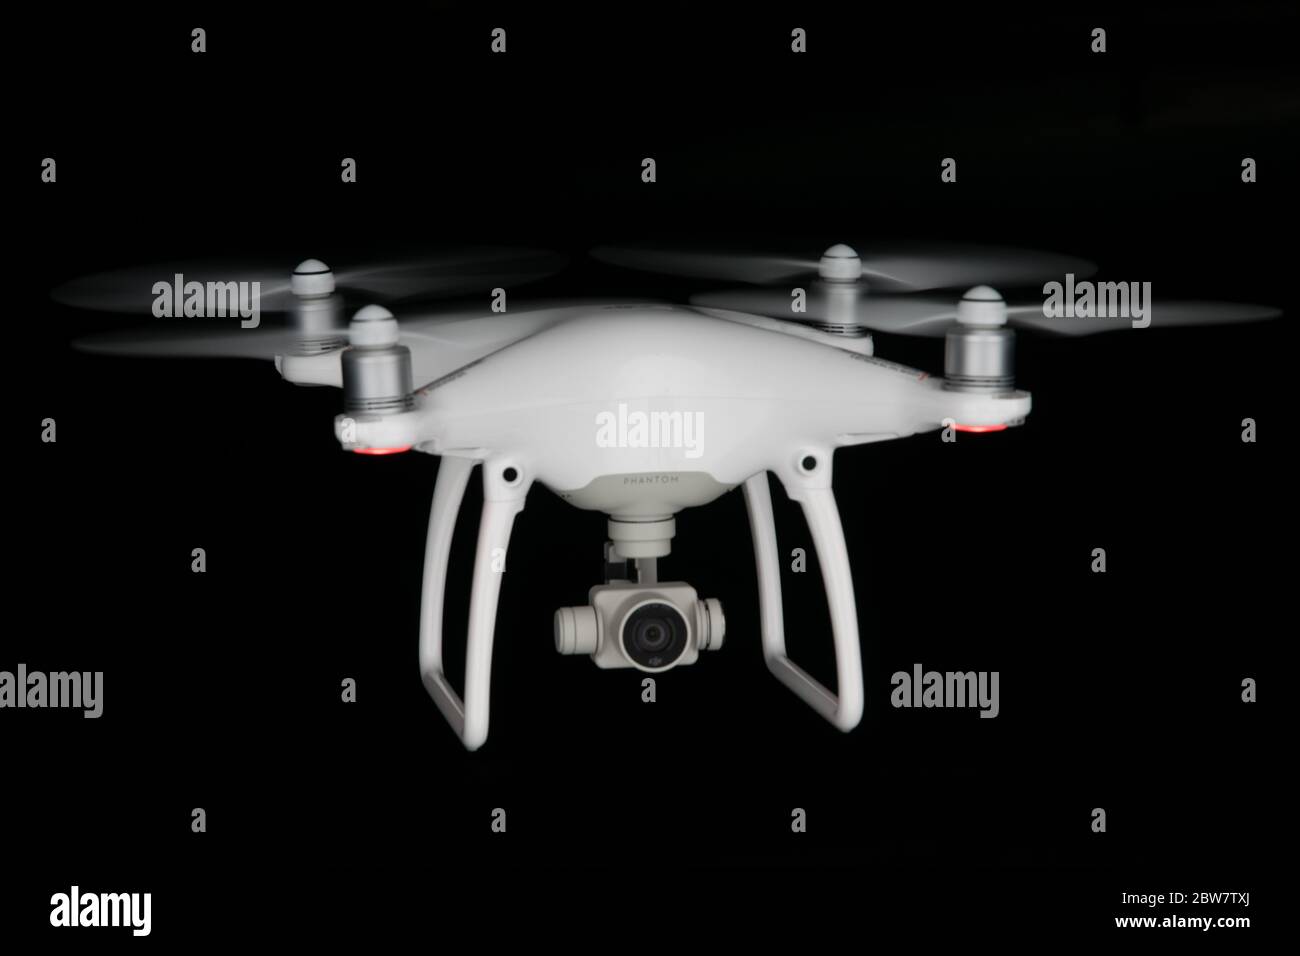 Drohne DJI Phantom 4 mit integrierter, Gimbal-gelagerter Kamera fliegt Nachts in der Luft - Flugdrohne Stock Photo